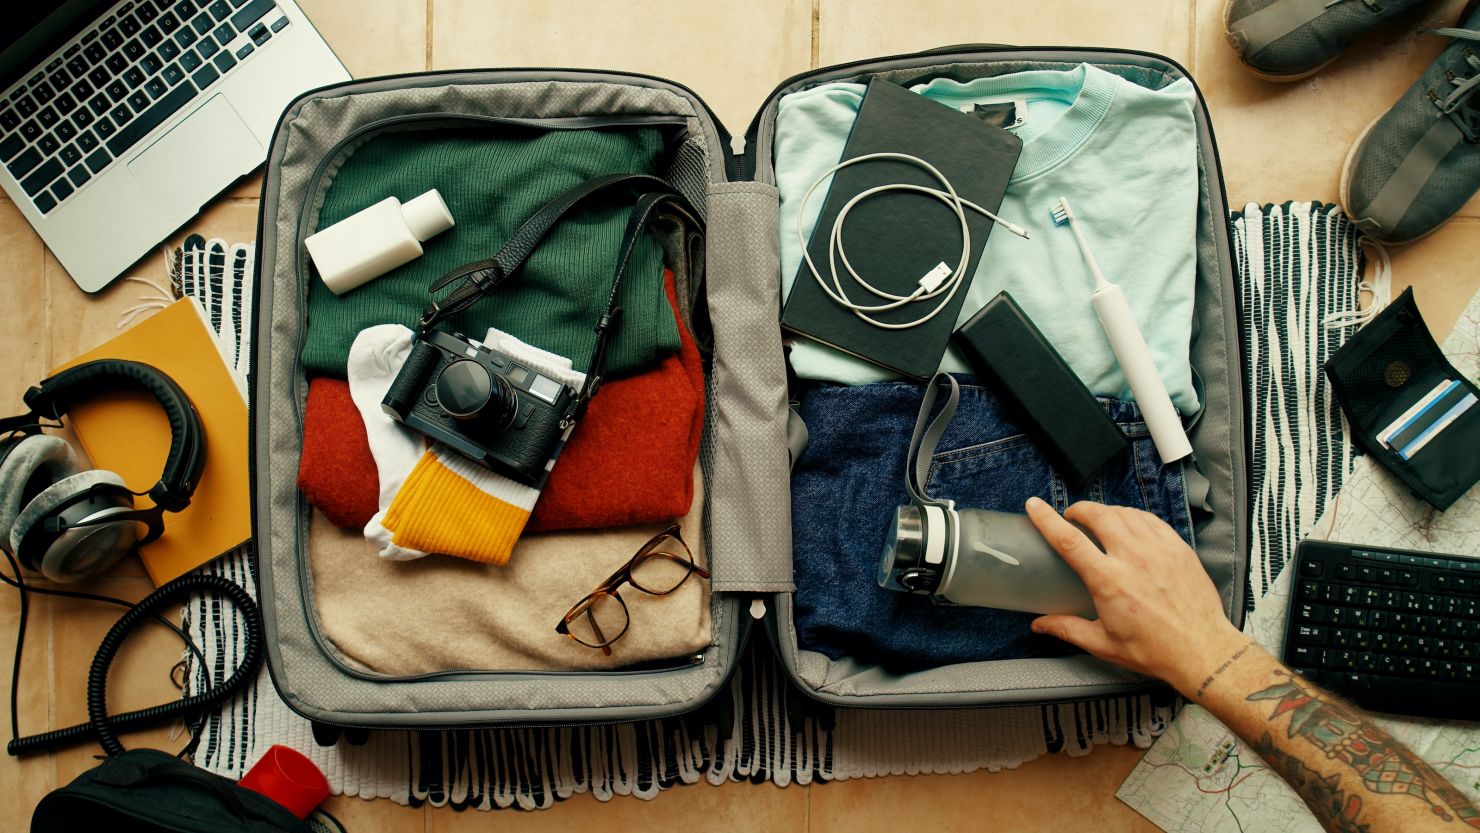 https://media.cnn.com/api/v1/images/stellar/prod/underscored-how-to-pack-a-suitcase-lead-packing.jpg?c=16x9&q=h_833,w_1480,c_fill